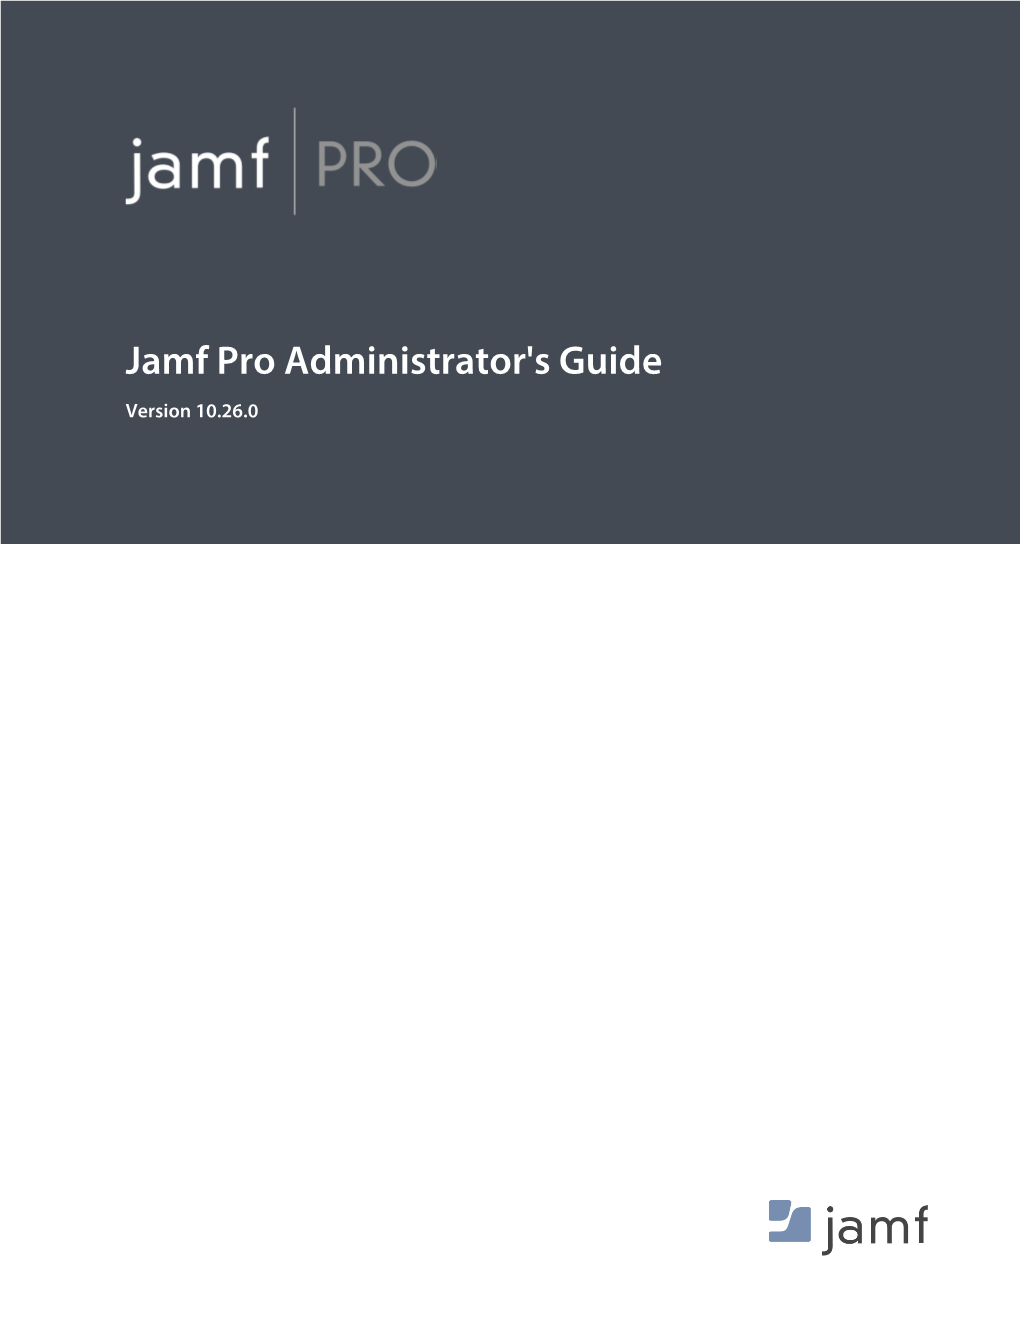 Jamf Pro Administrator's Guide Version 10.26.0 © Copyright 2002-2020 Jamf